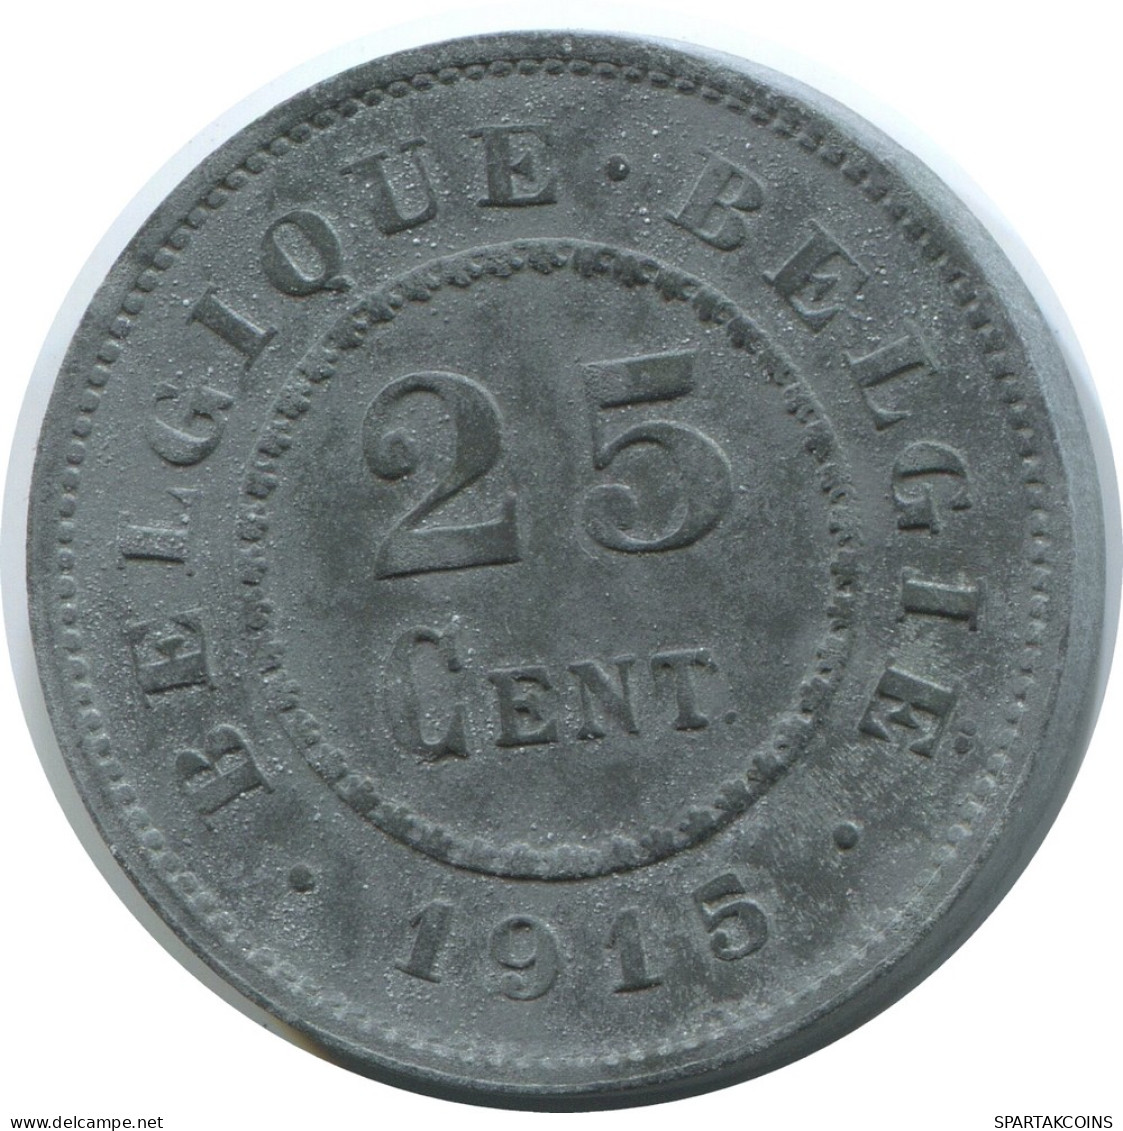 25 CENTIMES 1915 BELGIQUE-BELGIE BELGIEN BELGIUM Münze #AE735.16.D - 25 Cent